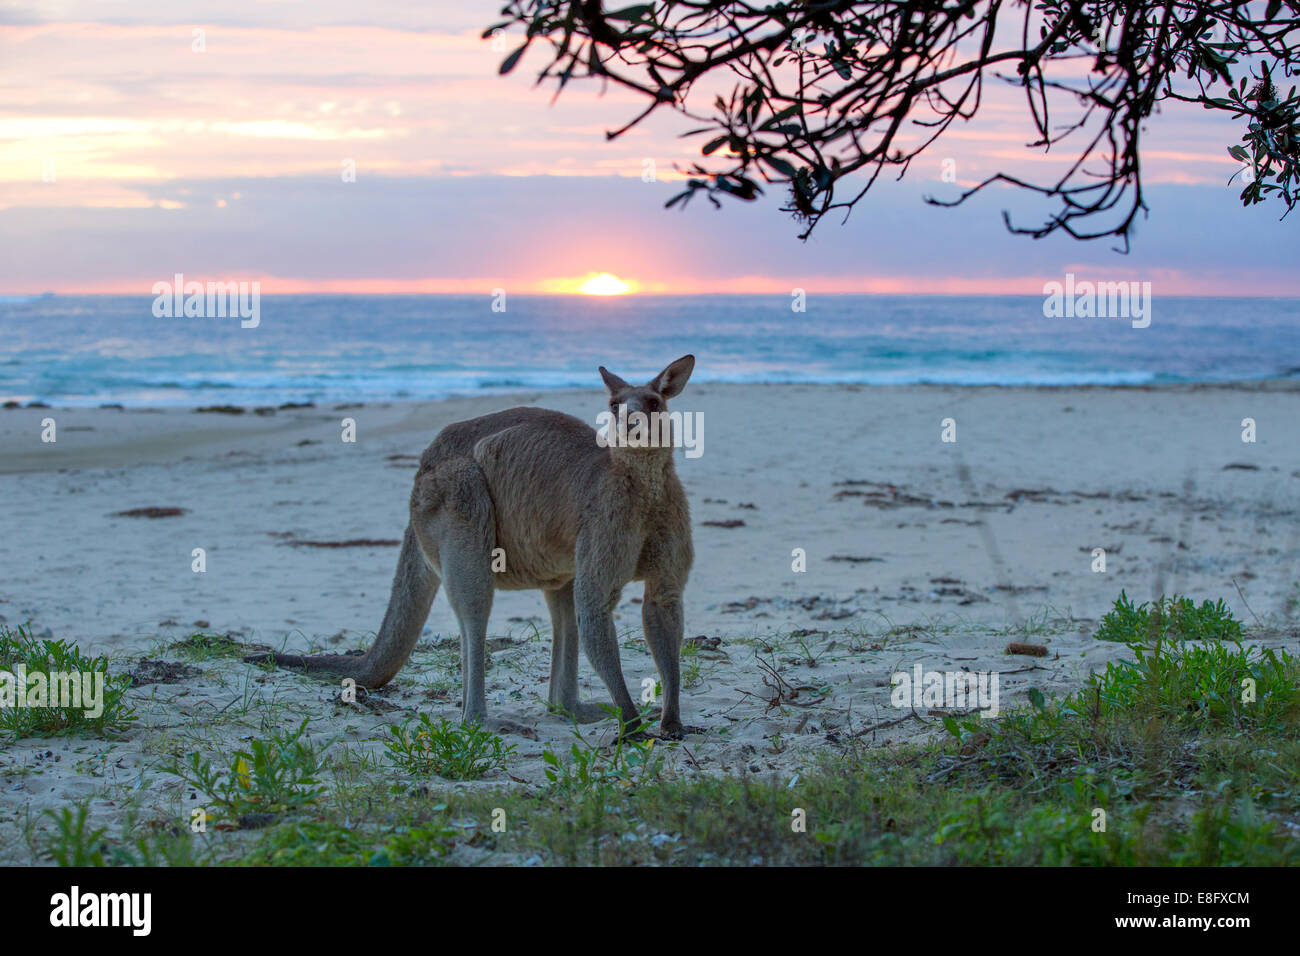 Kangaroo standing on beach, Australia Stock Photo